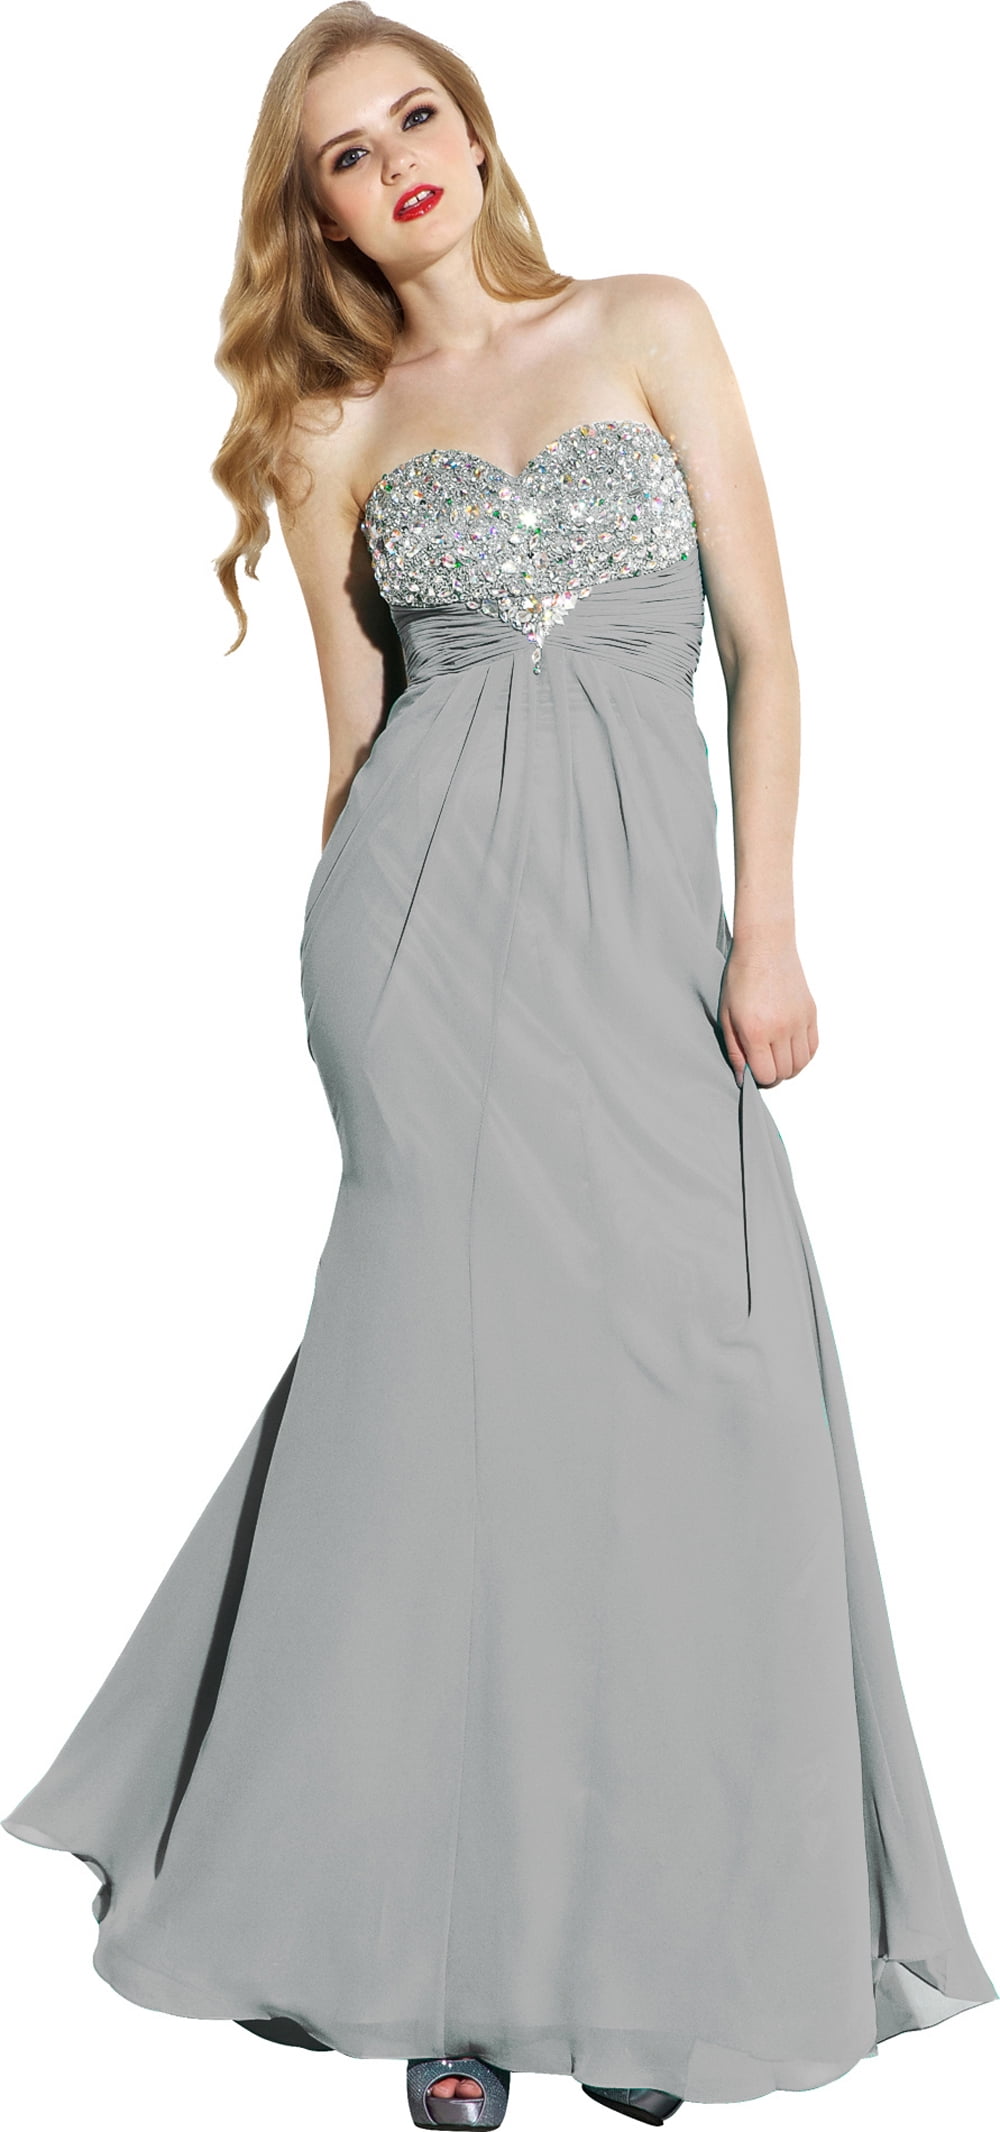 Strapless Beaded Chiffon Ball Gown Prom Dress, Small, Silver - Walmart.com